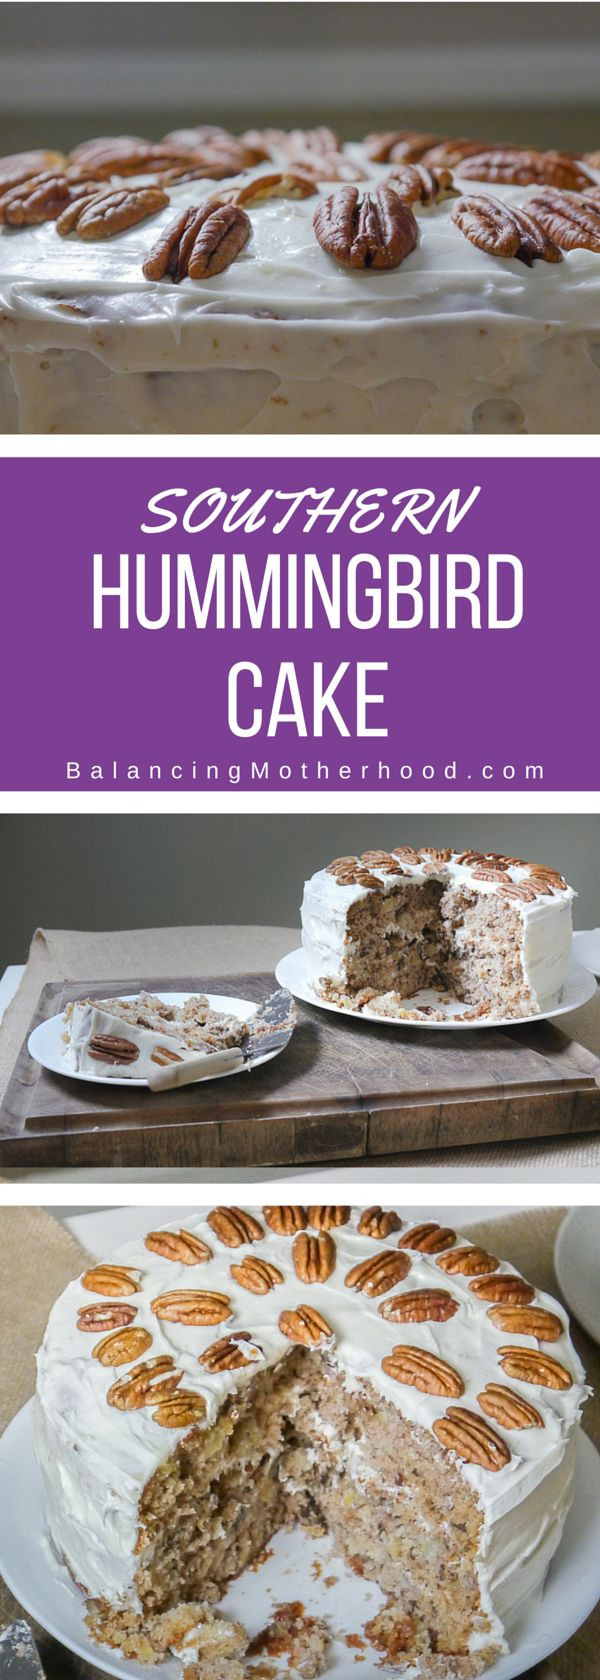 Hummingbird Cake Southern Living Recipe
 Hummingbird Cake Recipe